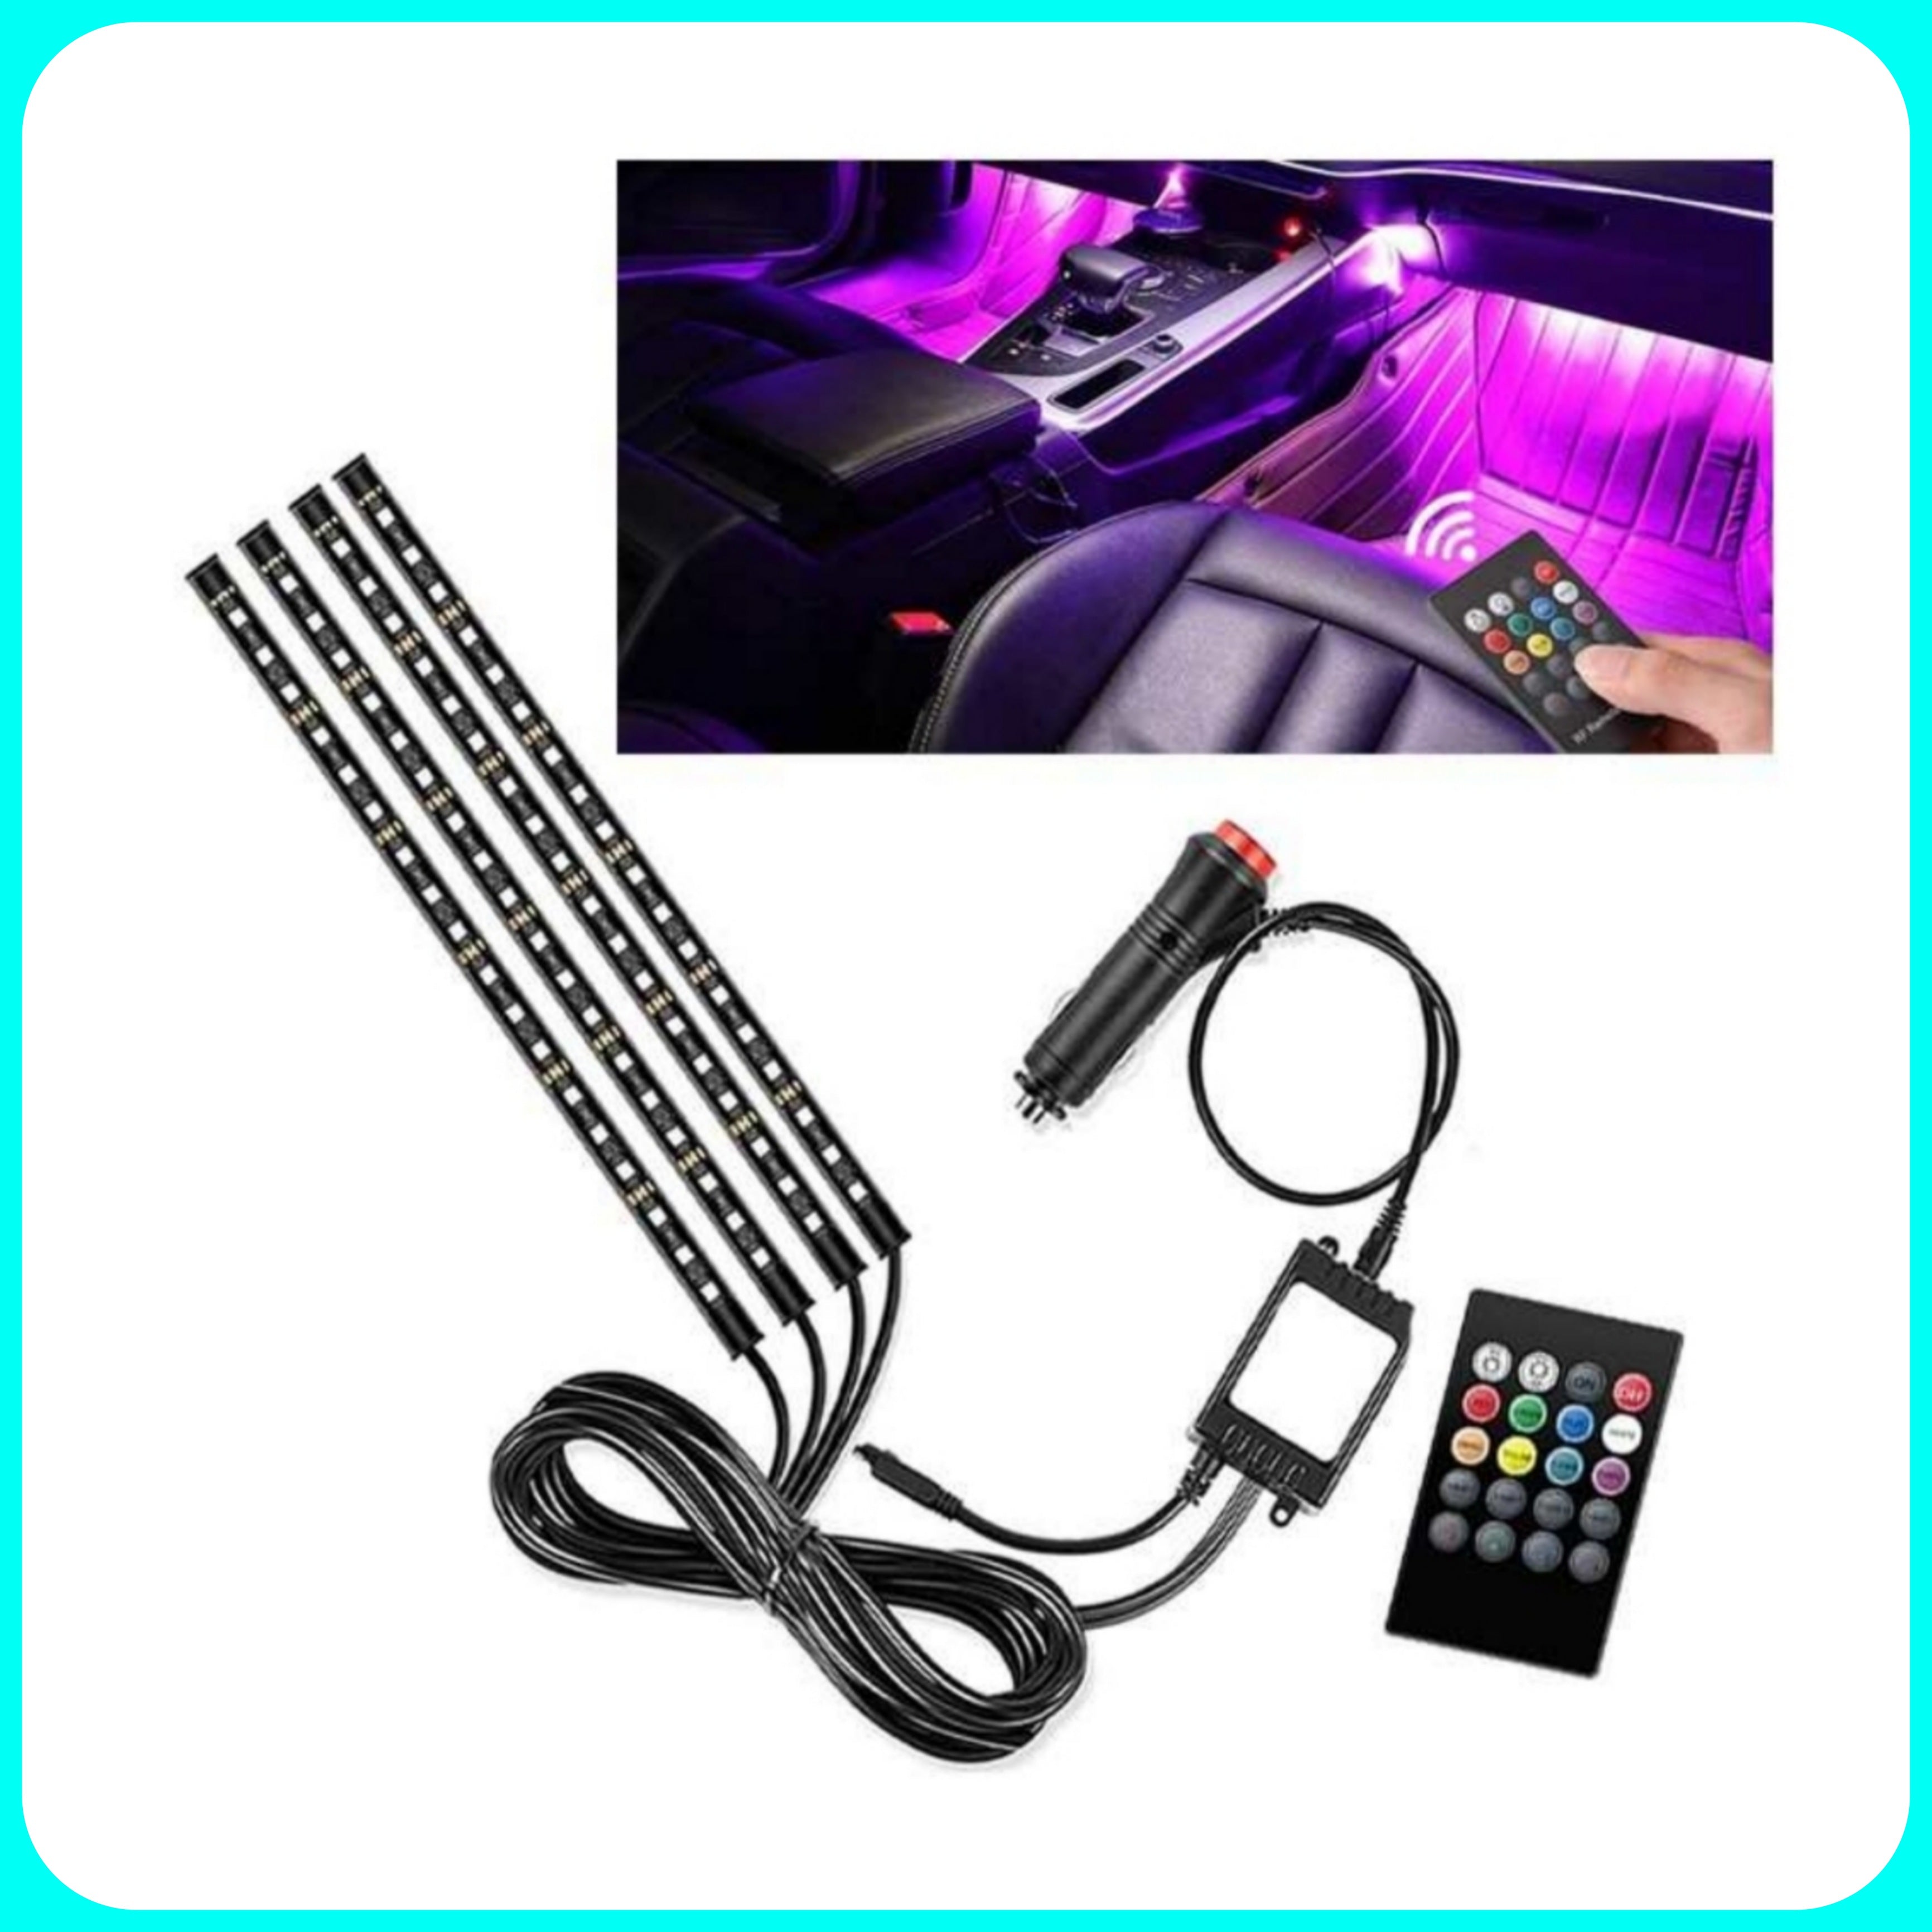 Luci Ambiente Adesiva Auto - Interni Auto RGB, 4 Strip Luminose, Adesive, 72LED, Impermeabile Tuning, Comando Musicale